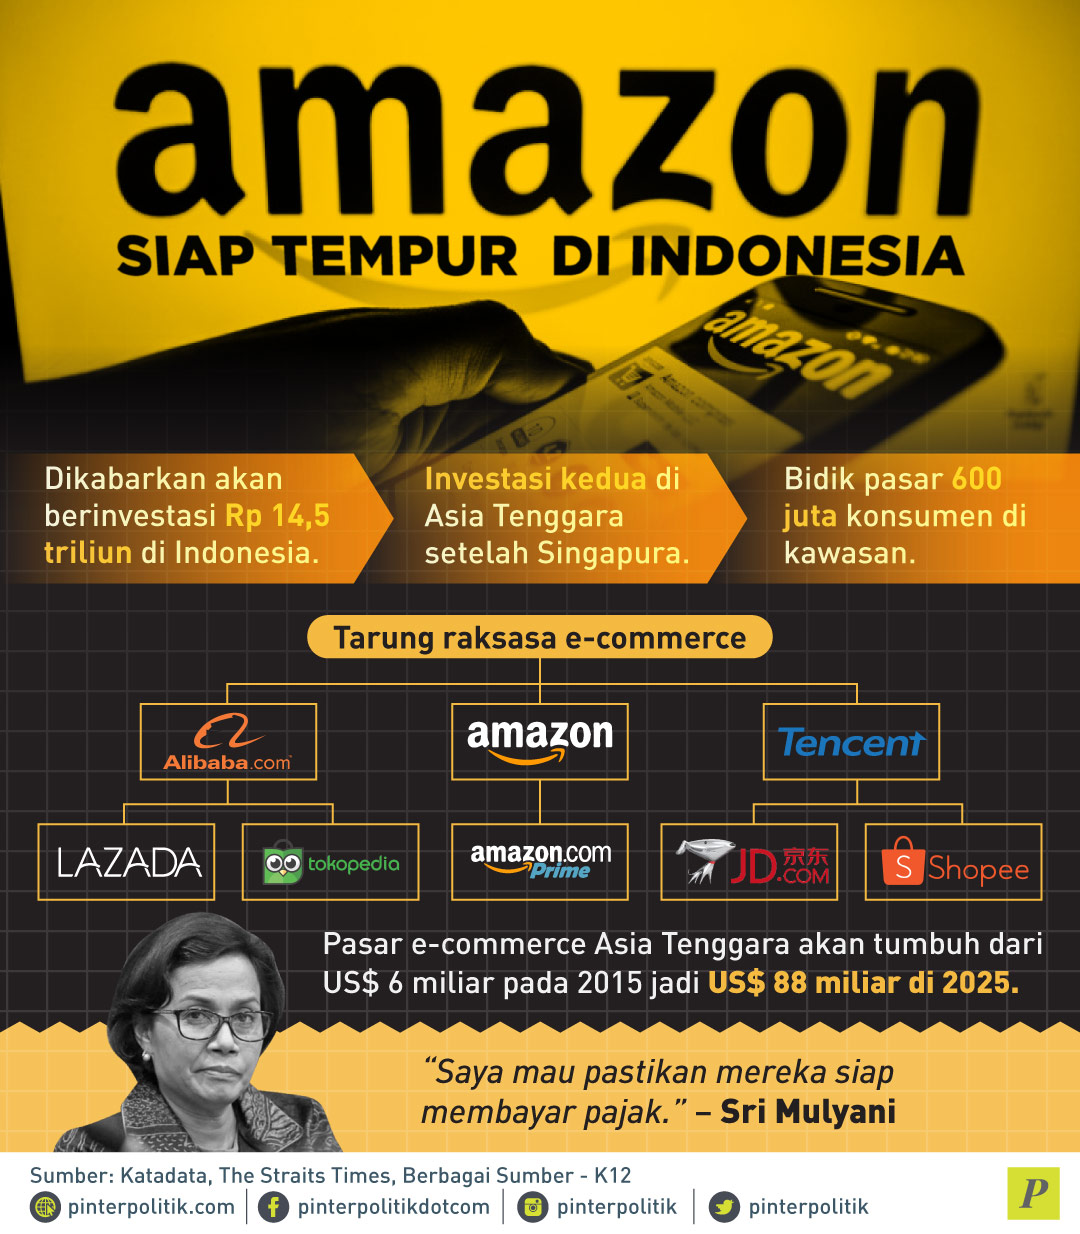 Amazon indonesia